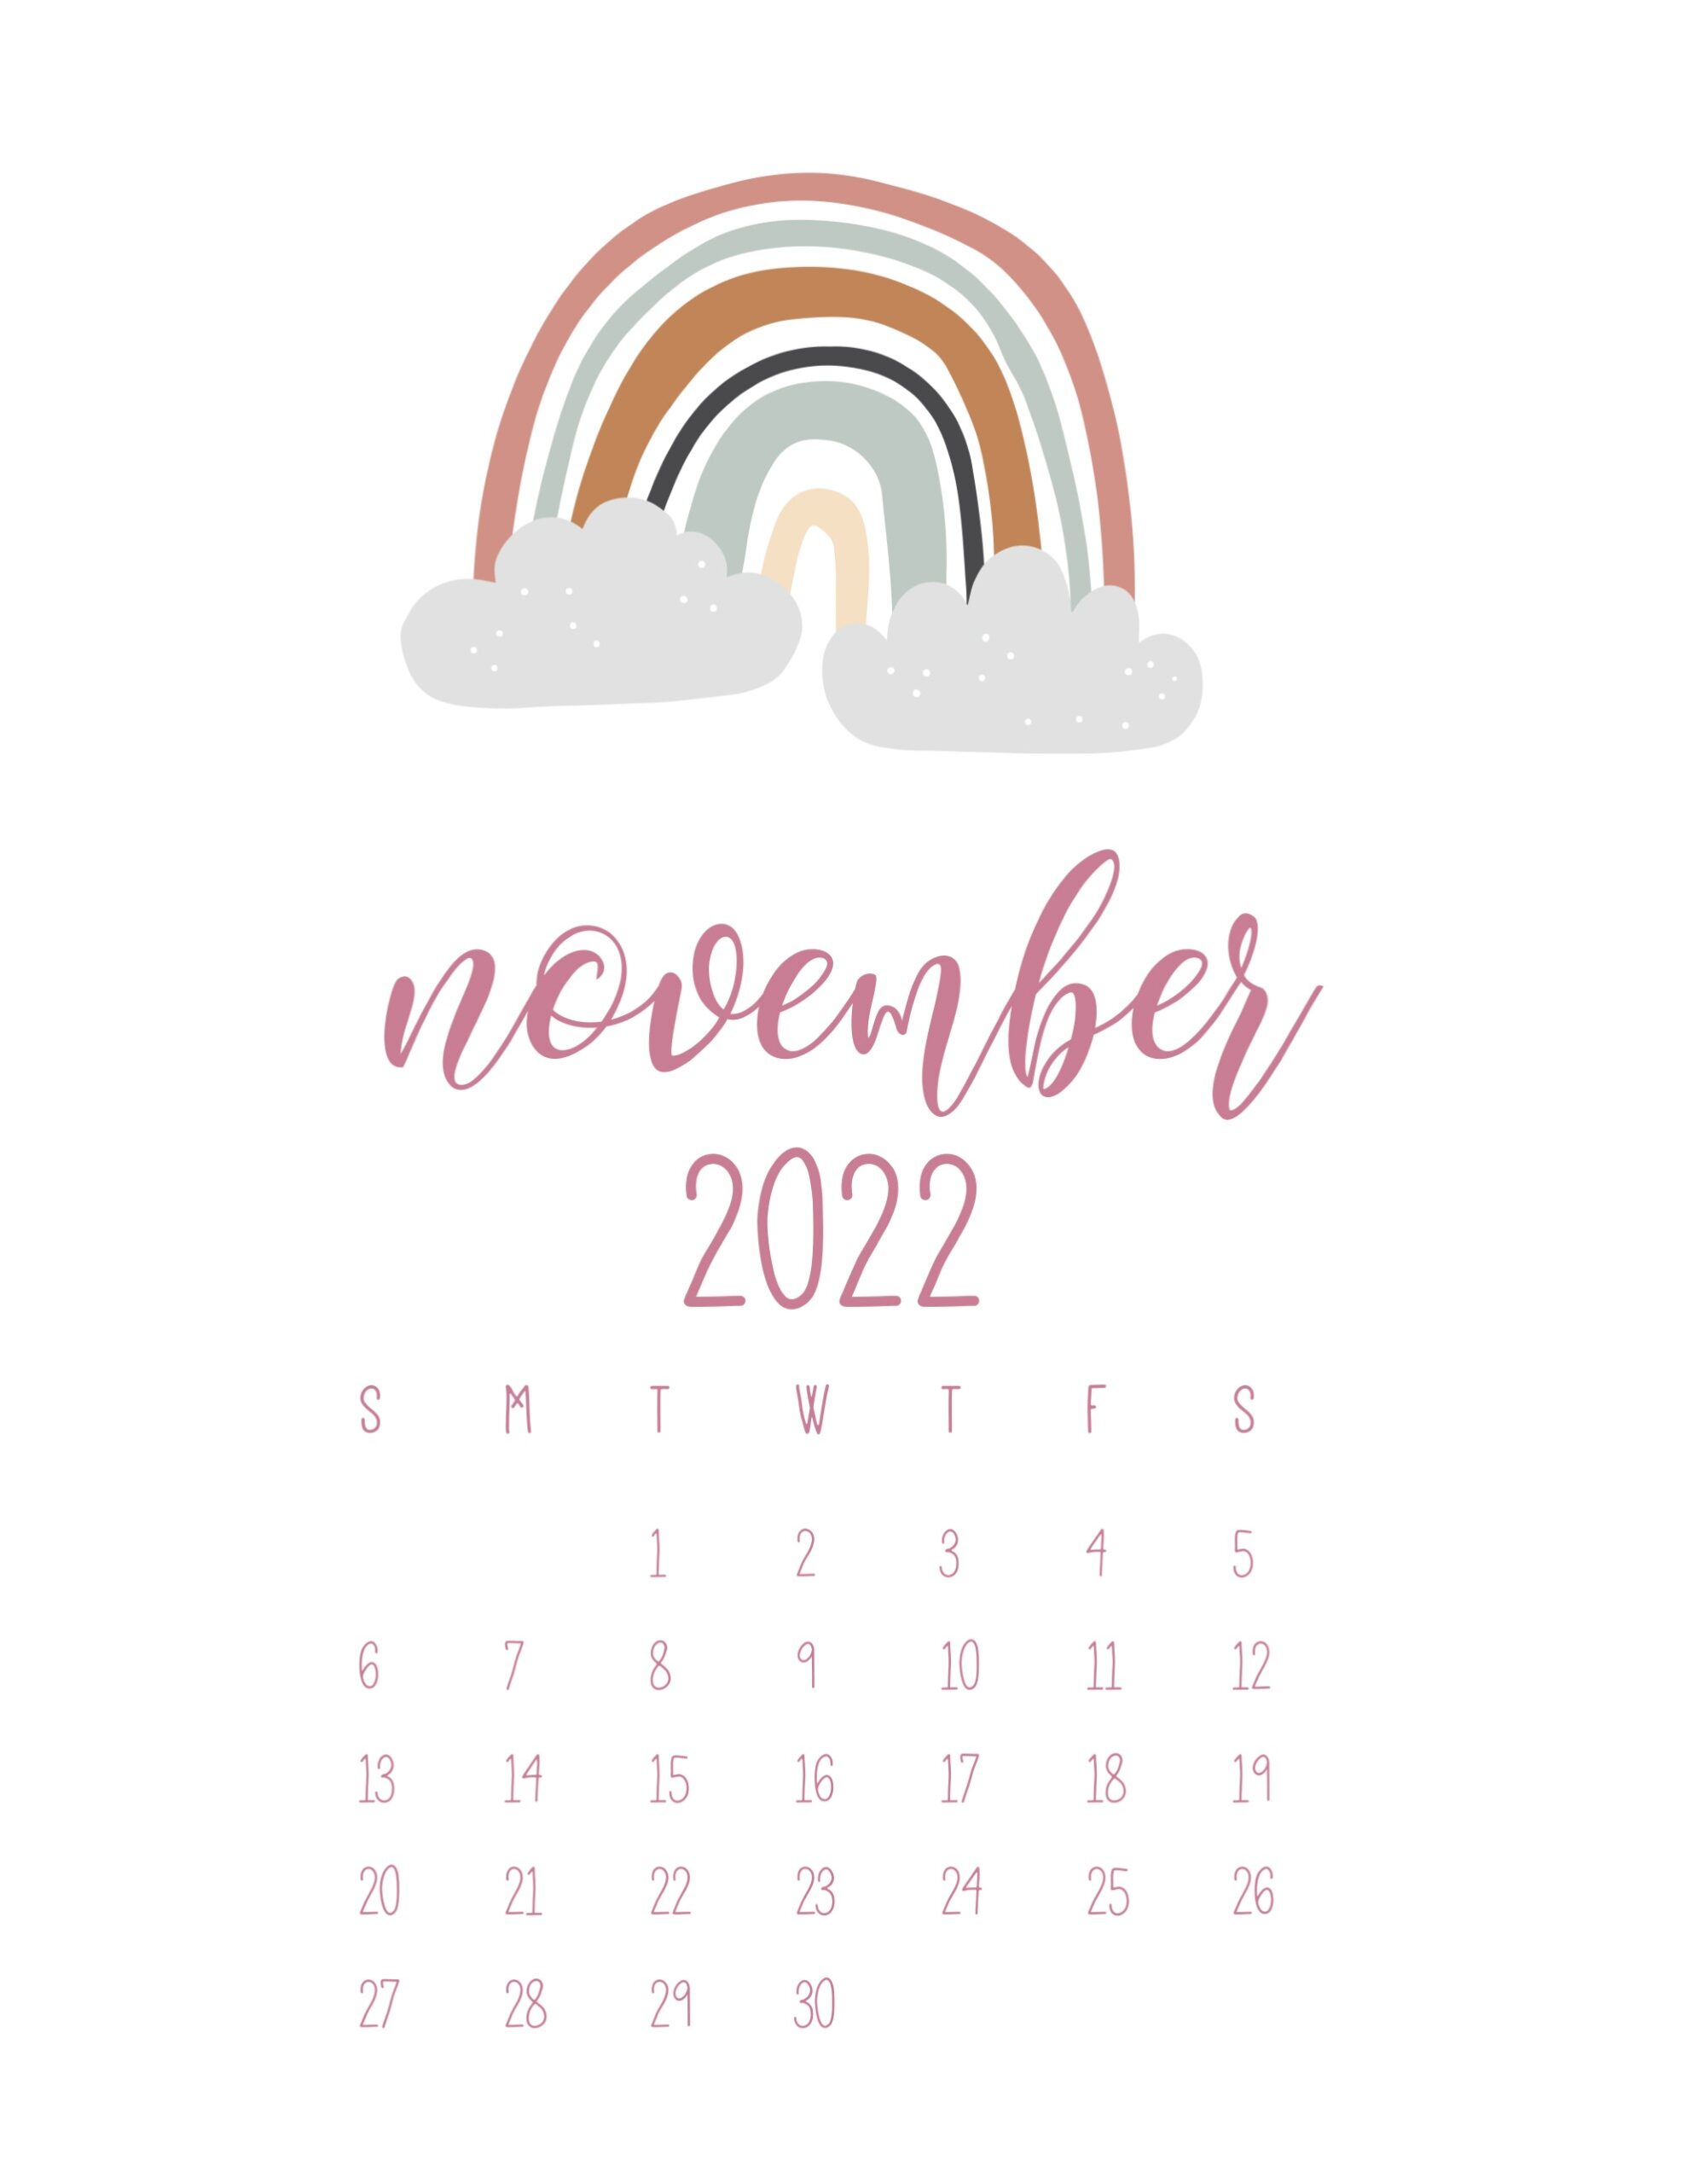 November 2022 Calendar Wallpaper Free Cute Printable Calendar 2022 - World Of Printables